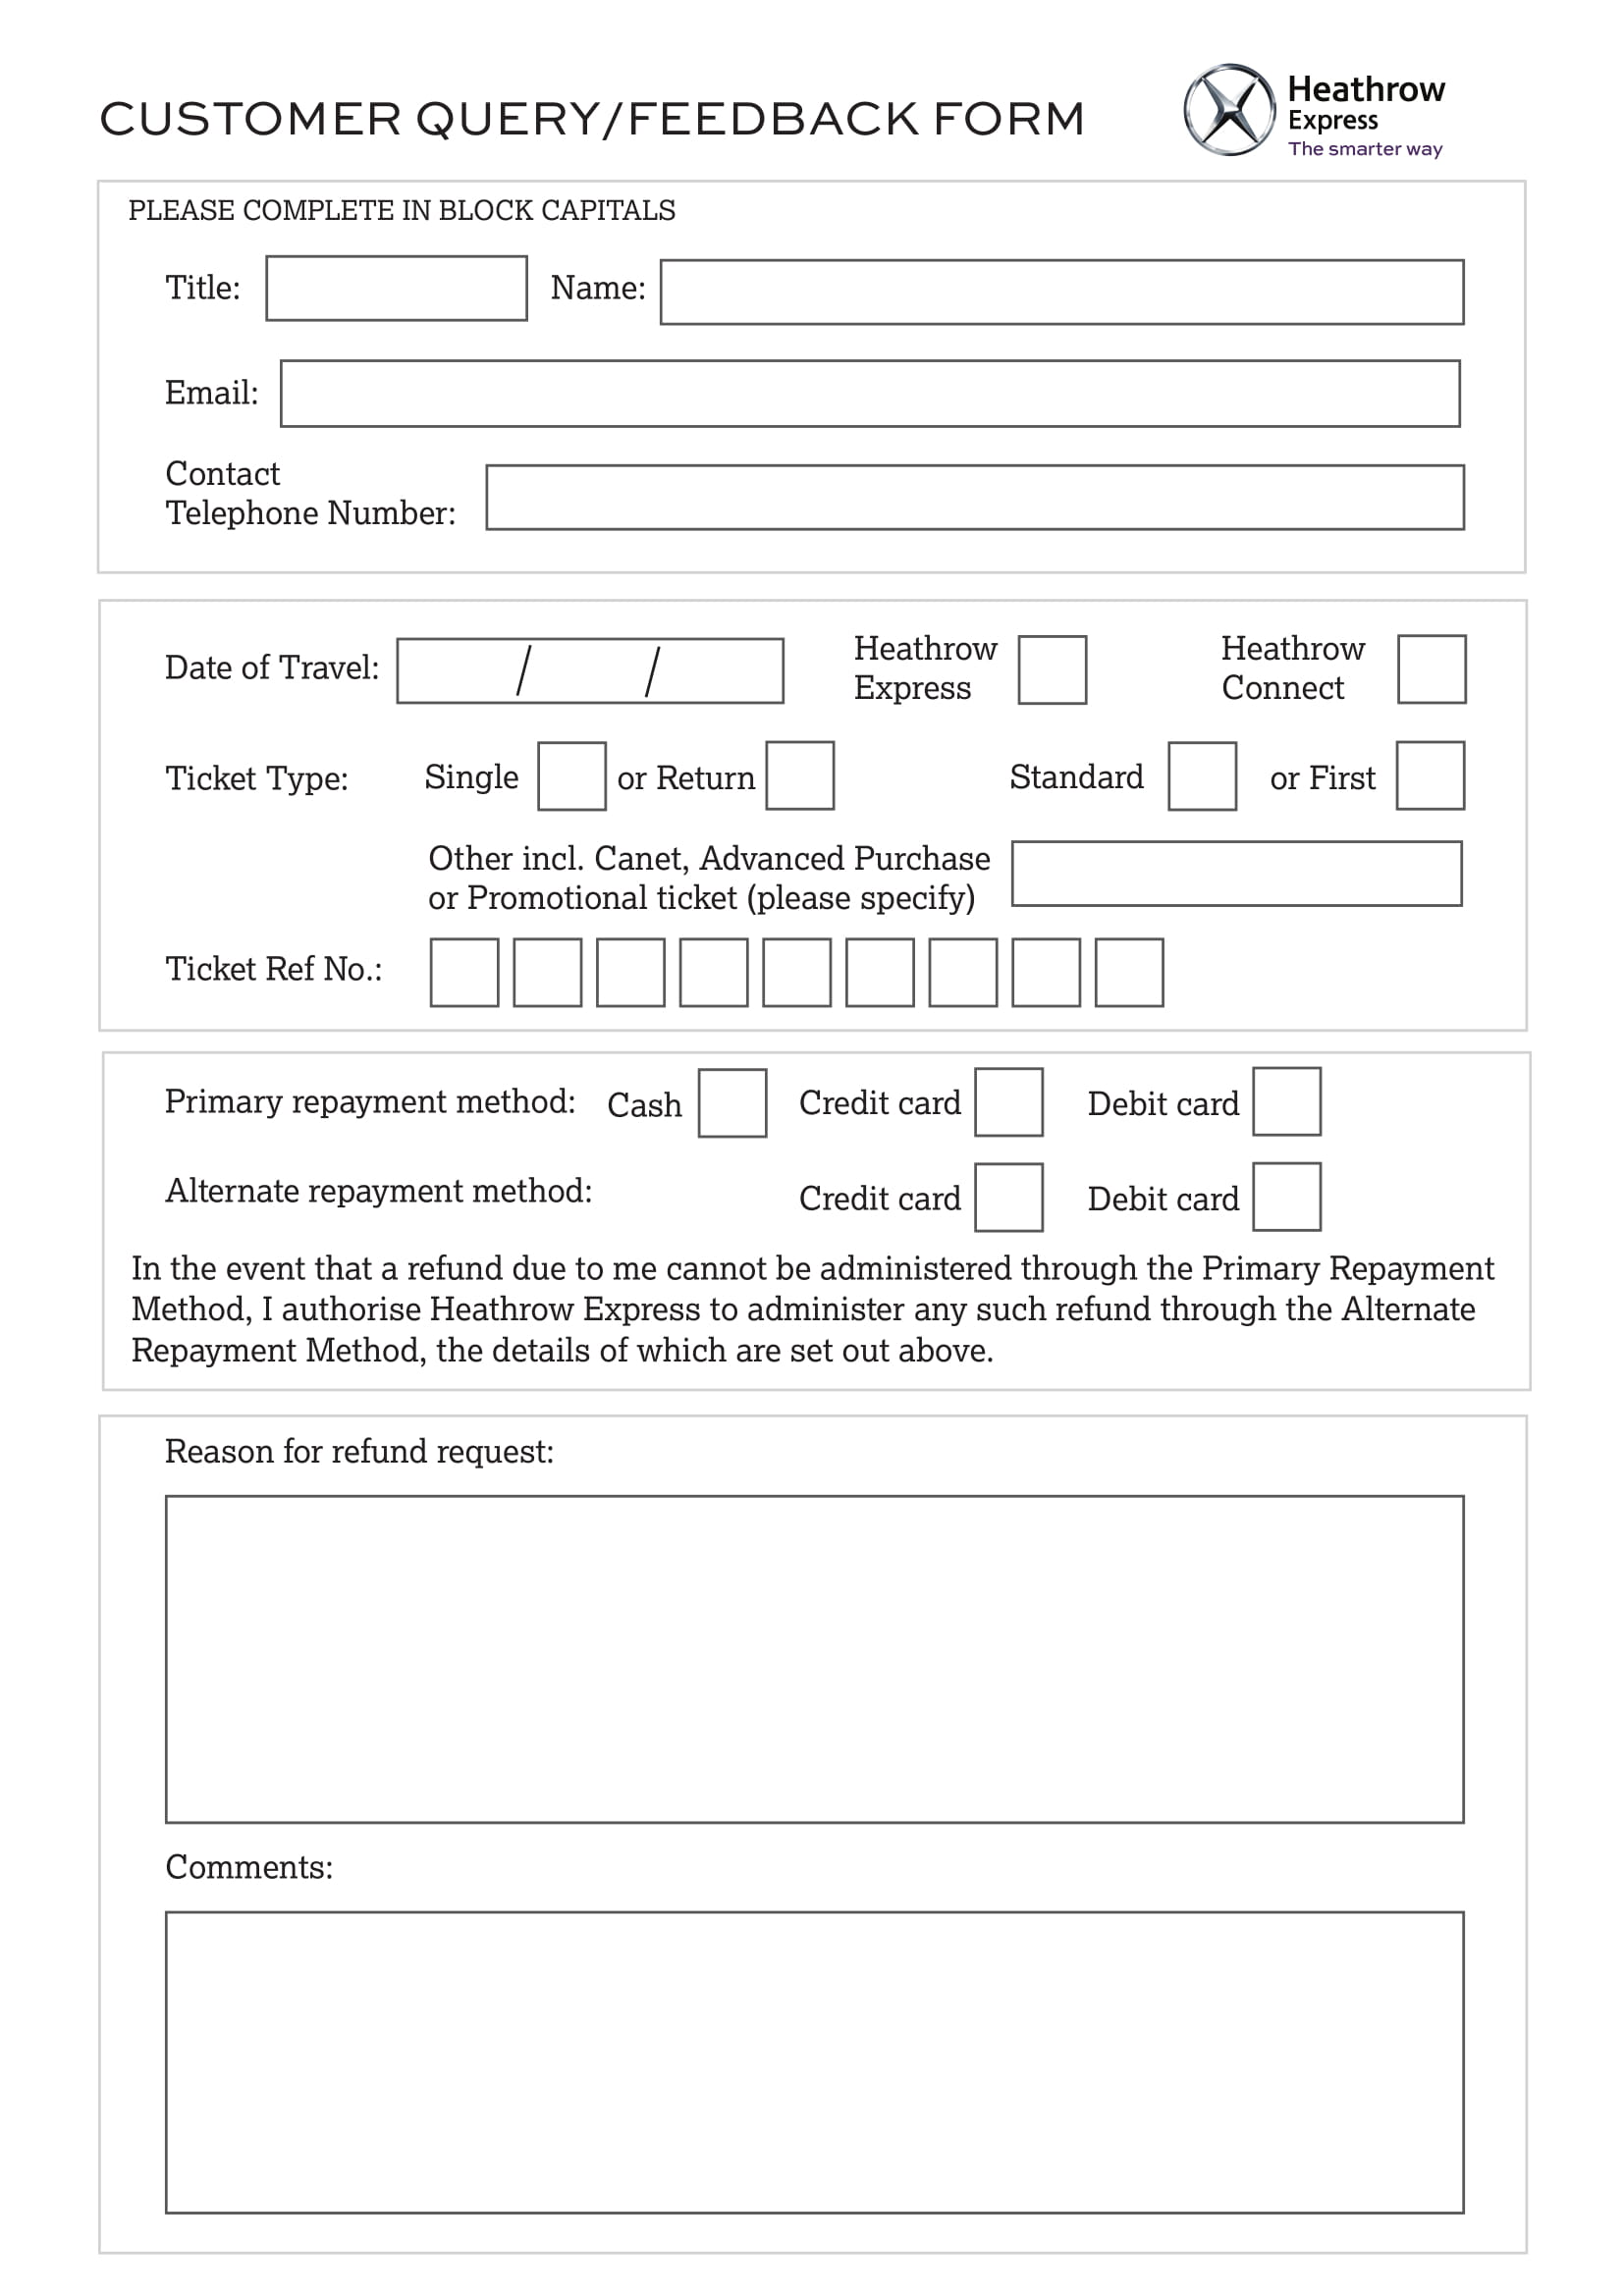 customer query feedback form 1